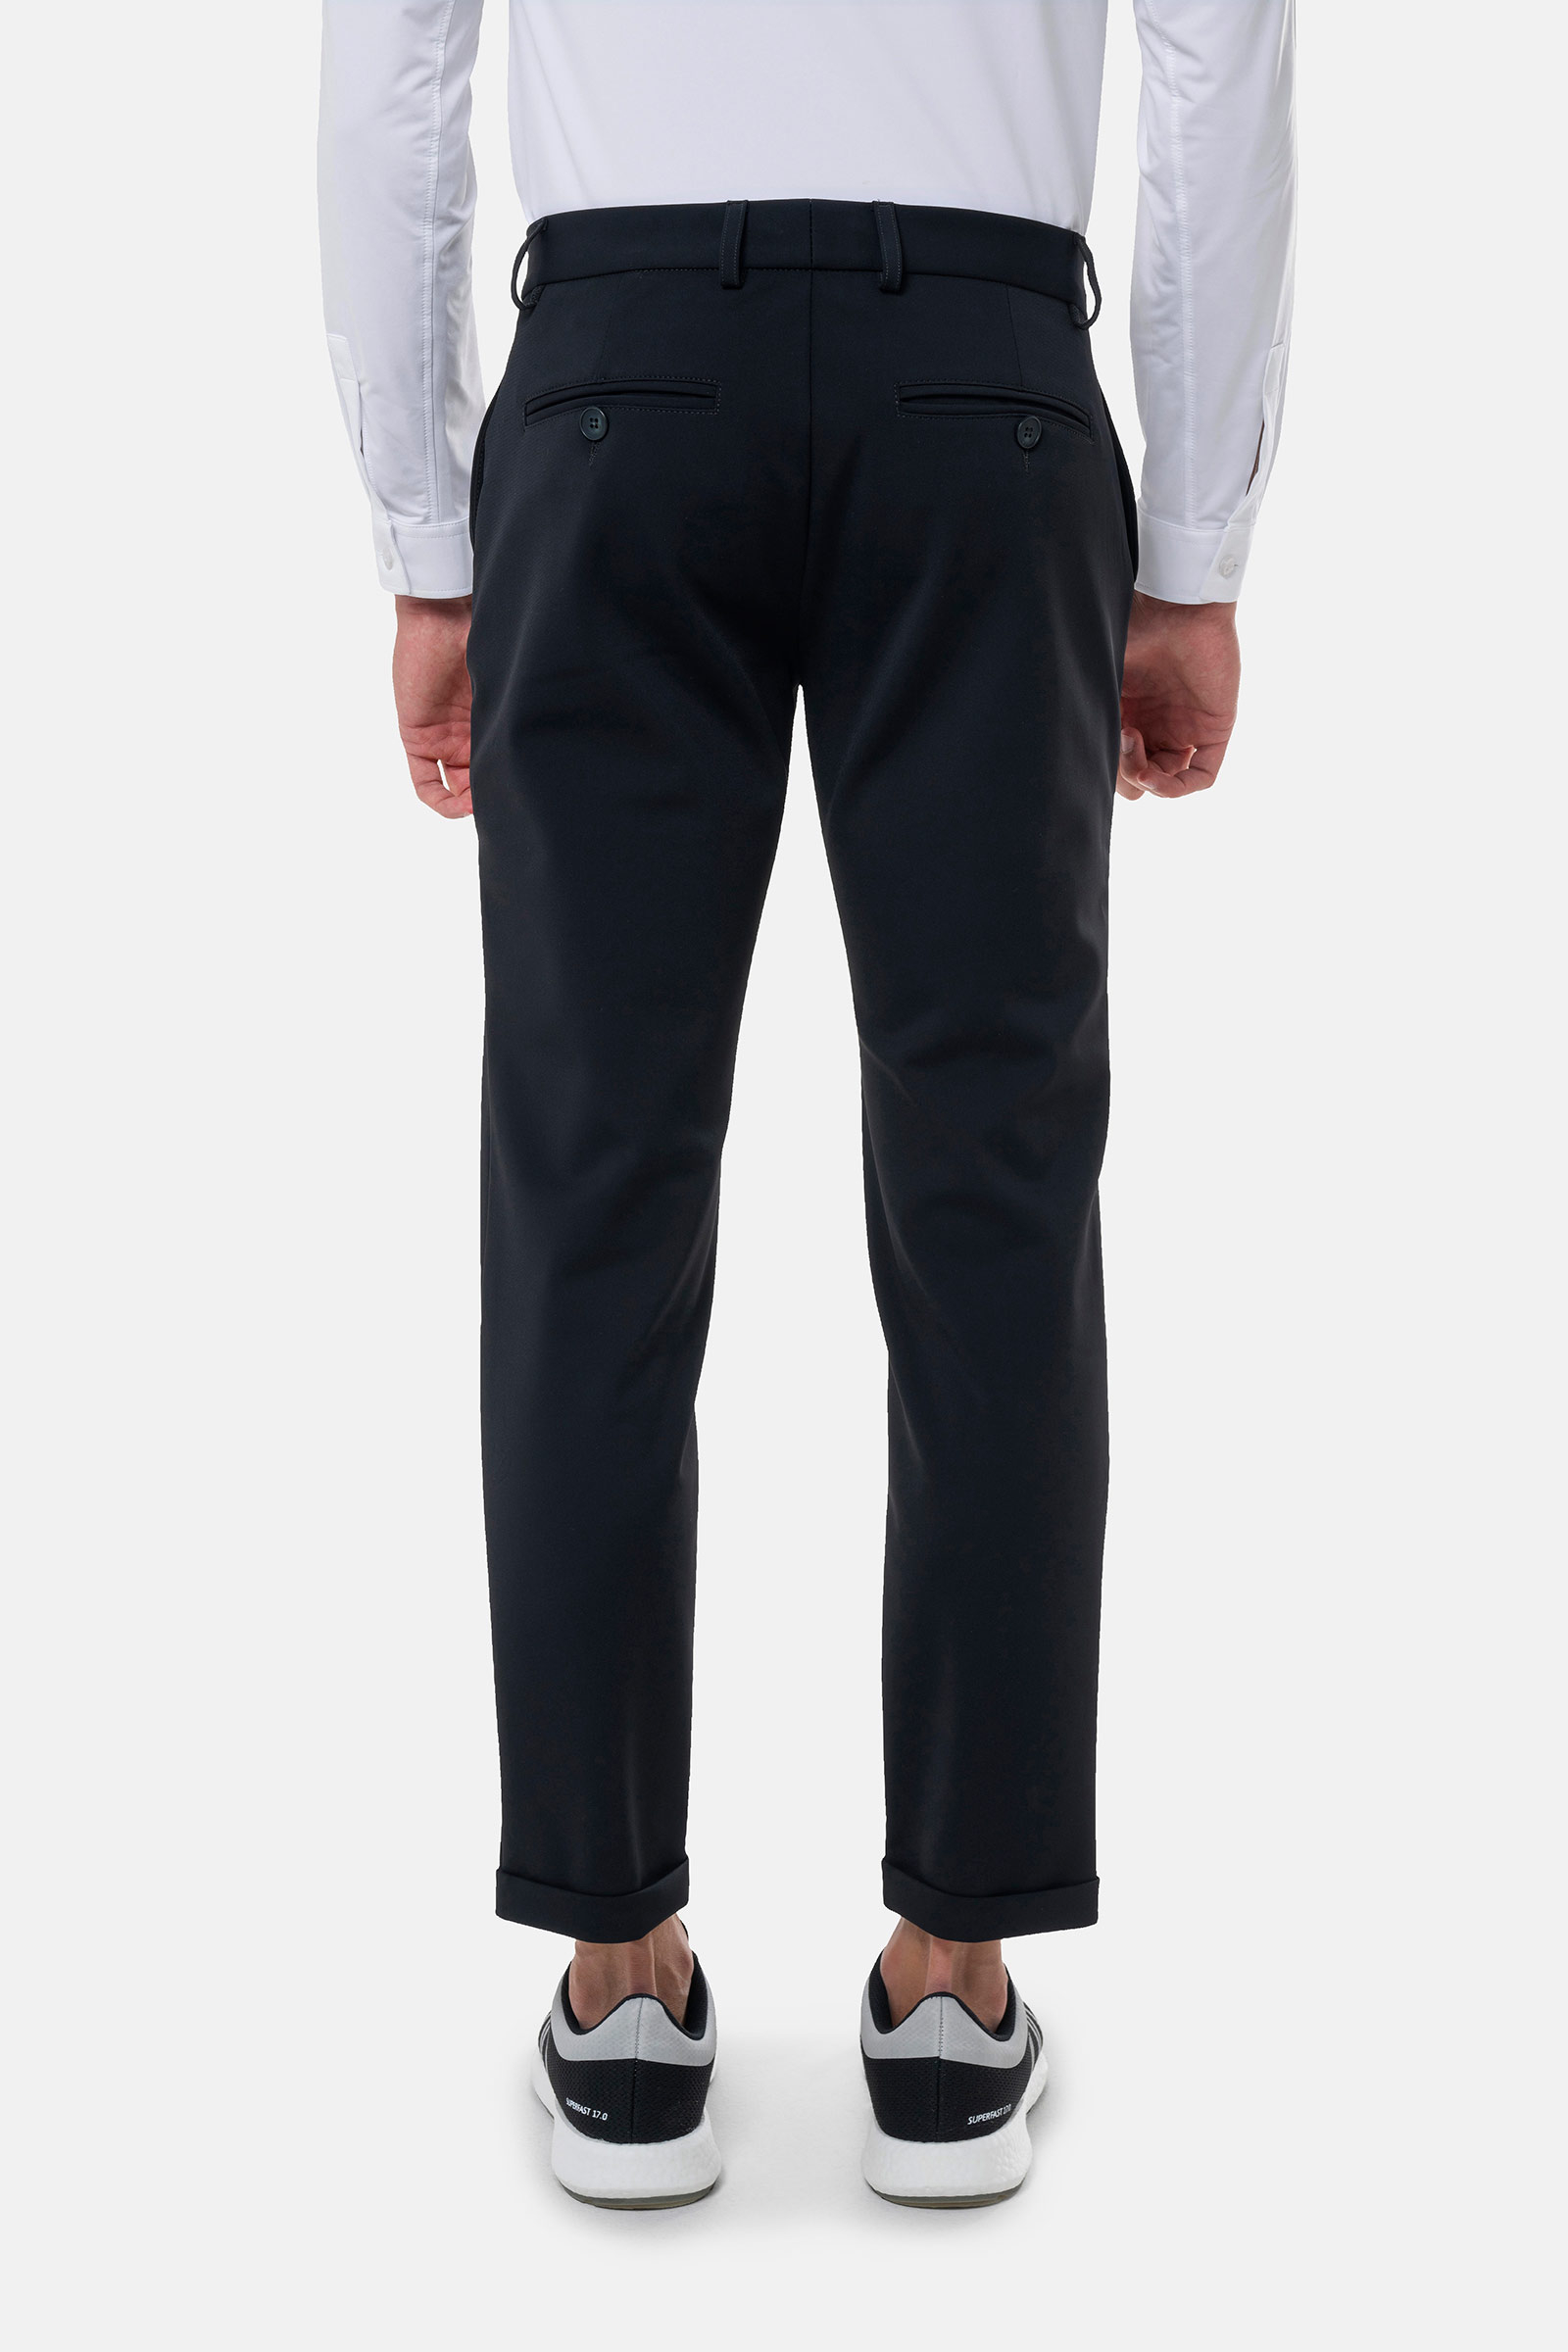 CLASSIC PANTS - BLACK,ANTHRACITE - Hydrogen - Luxury Sportwear